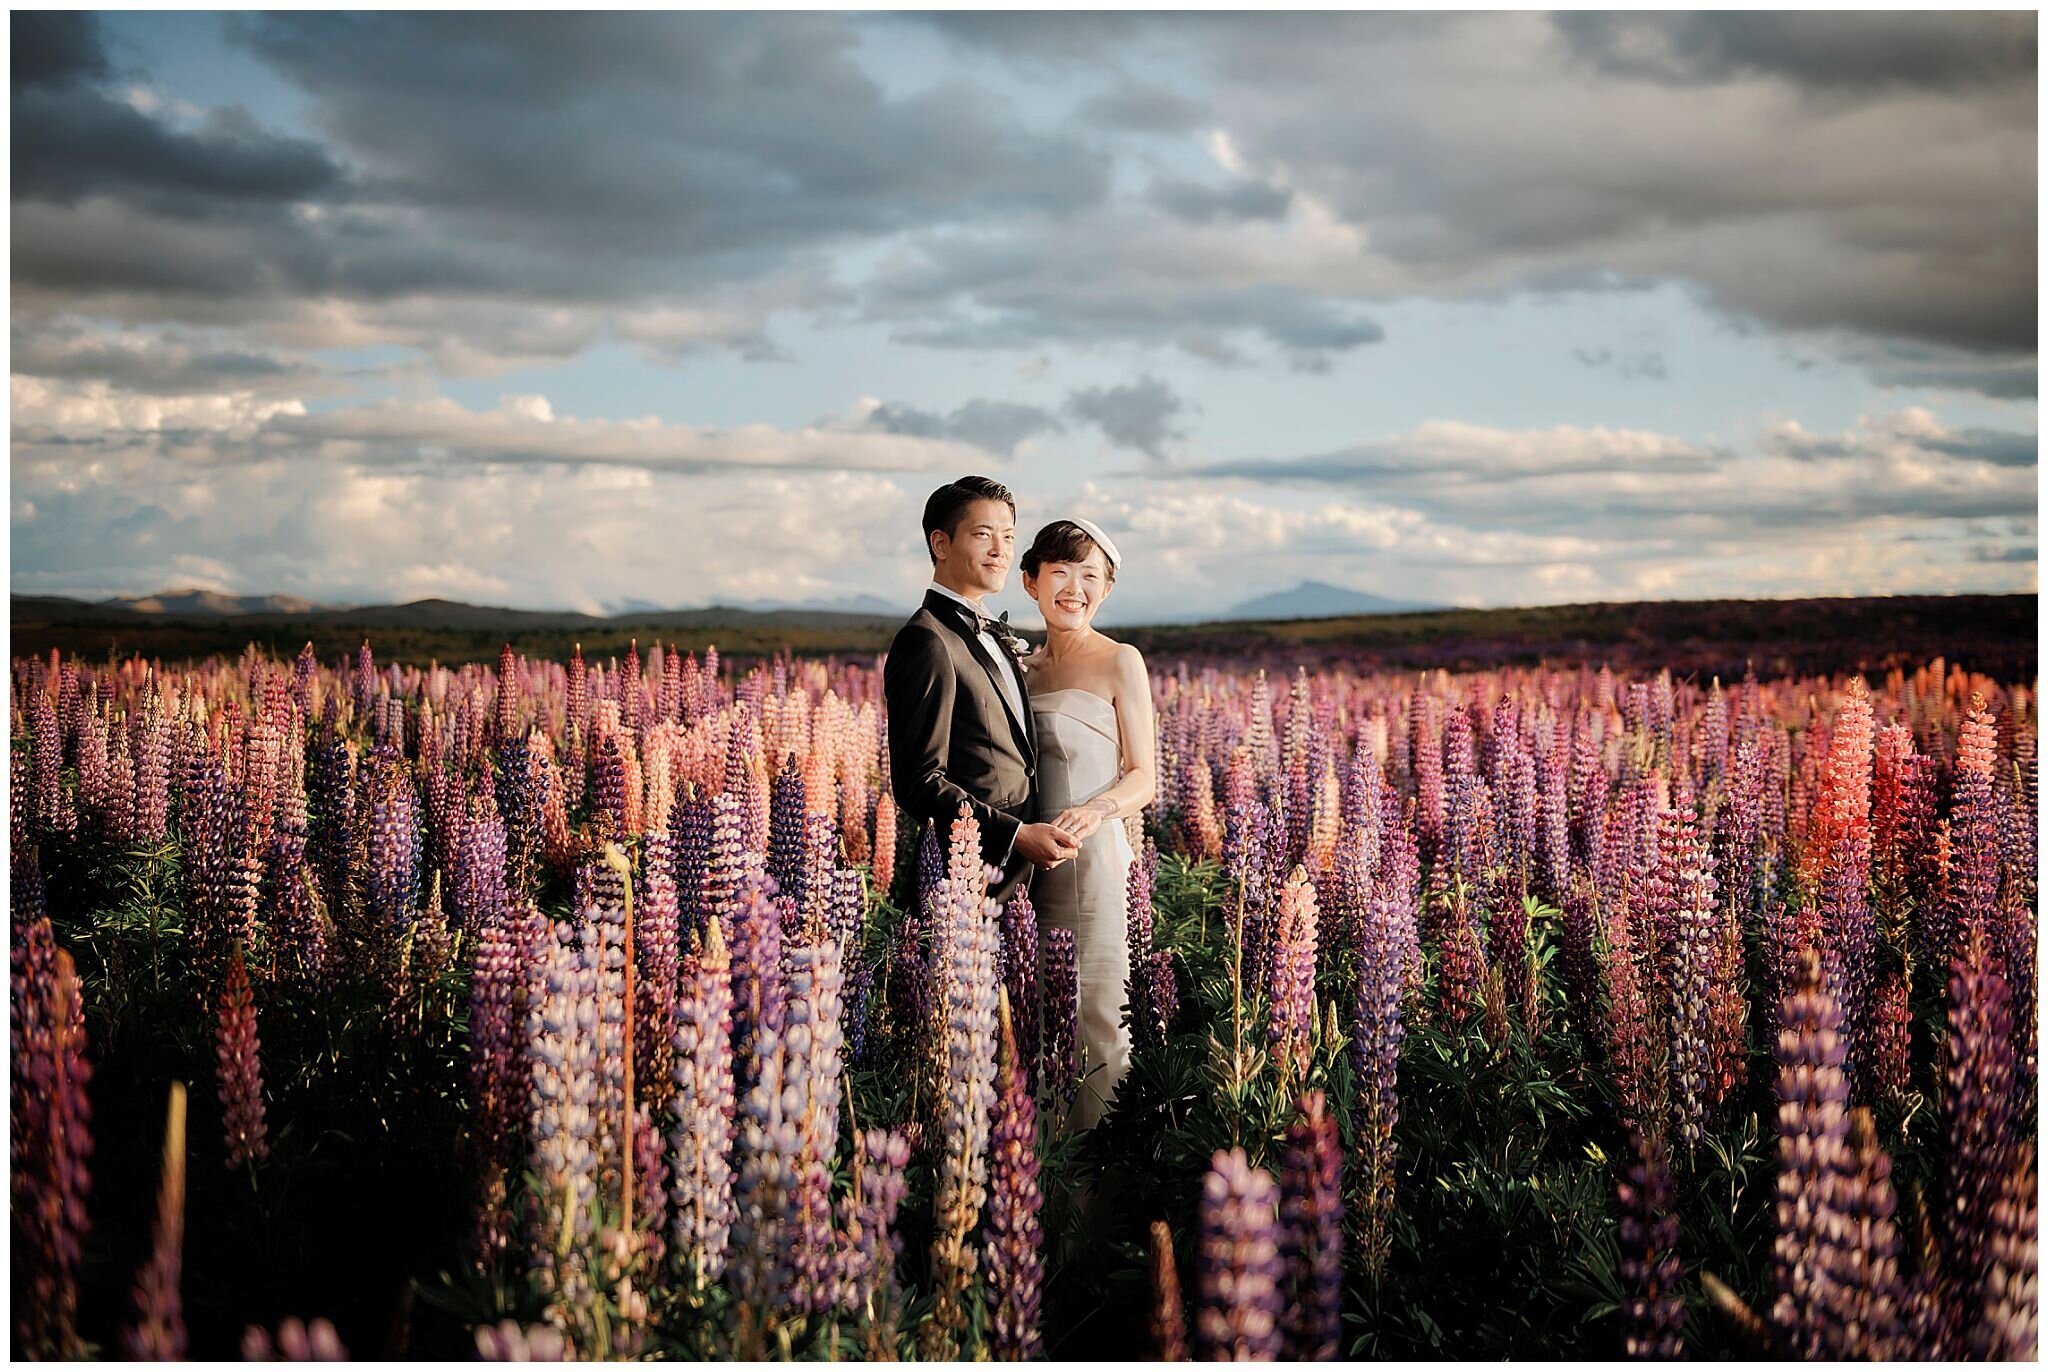 Queenstown and Lake Tekapo, New Zealand Pre-Wedding Shoot クイーンズタウンとテカポ、ニュージーランドで撮る素敵な前撮りフォトウェディング ヘリウェディング　ウェディング (Copy)